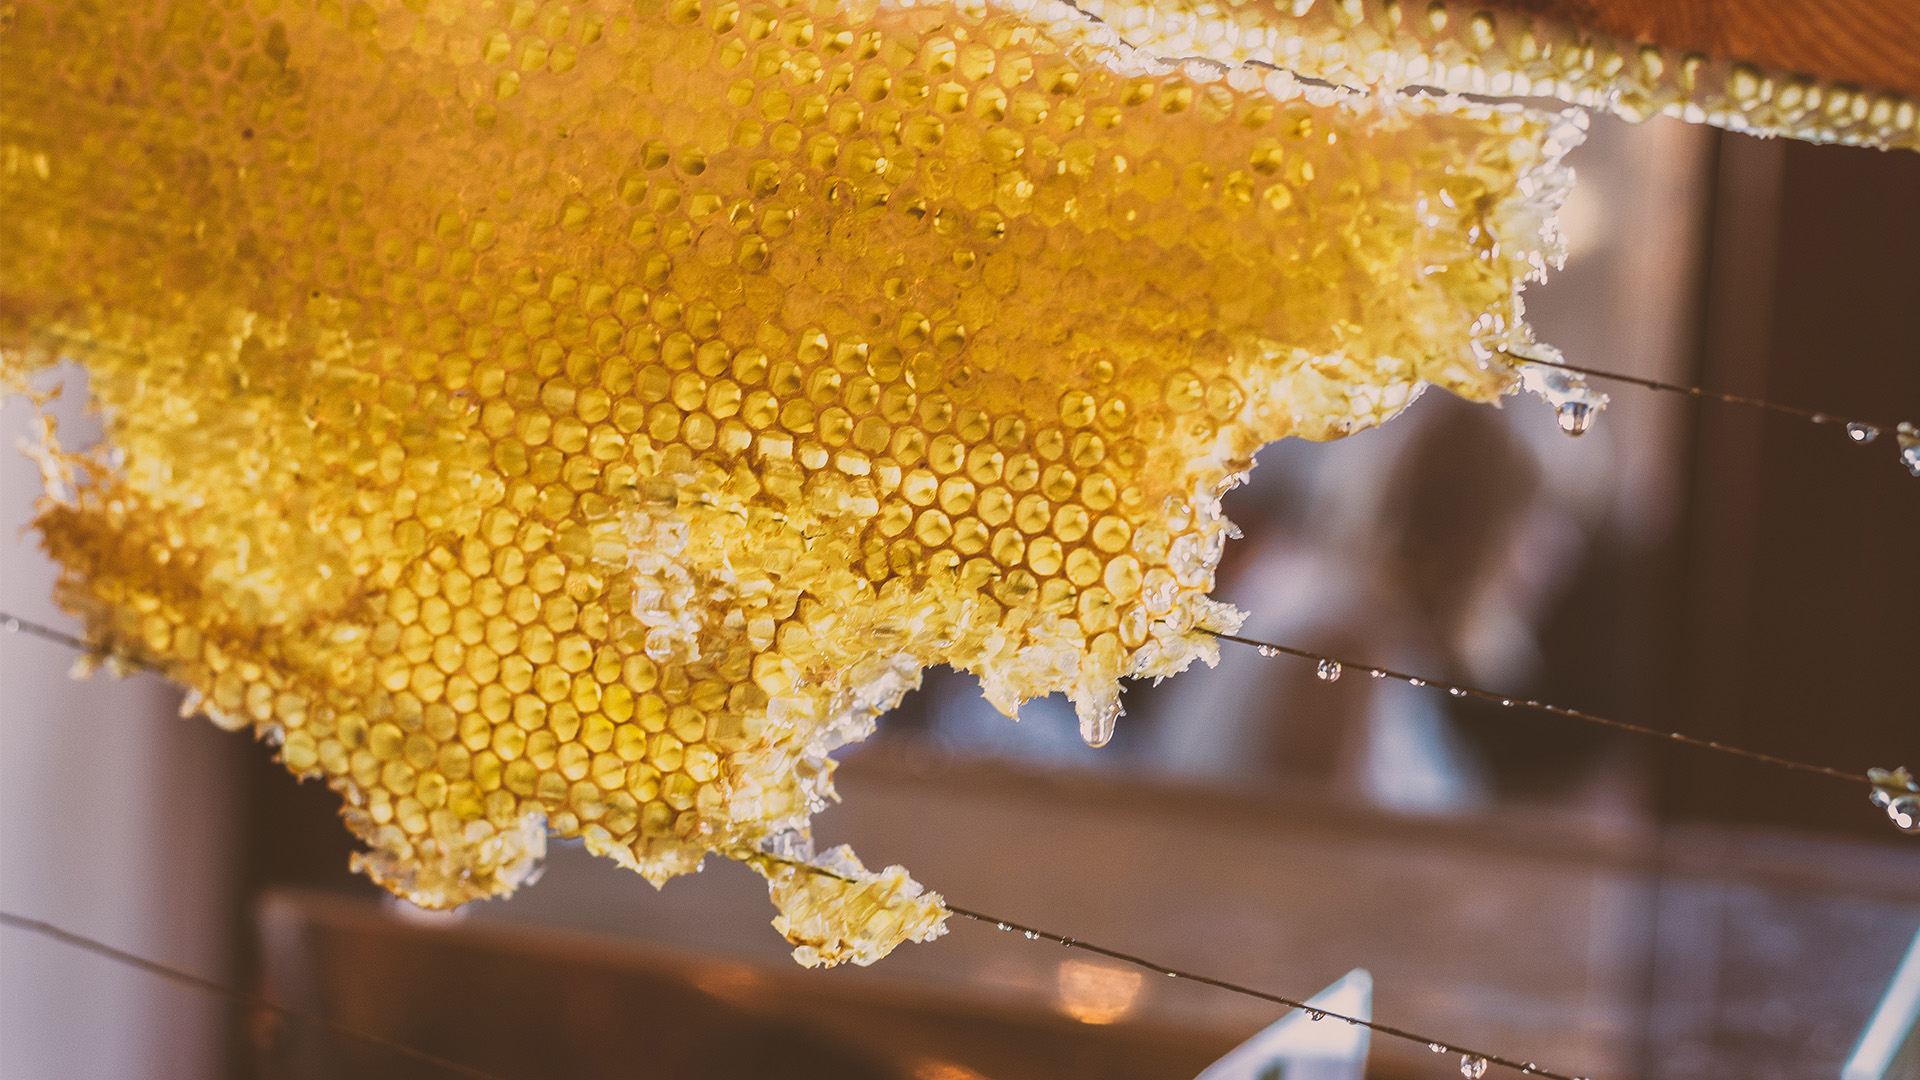 Svensk honung